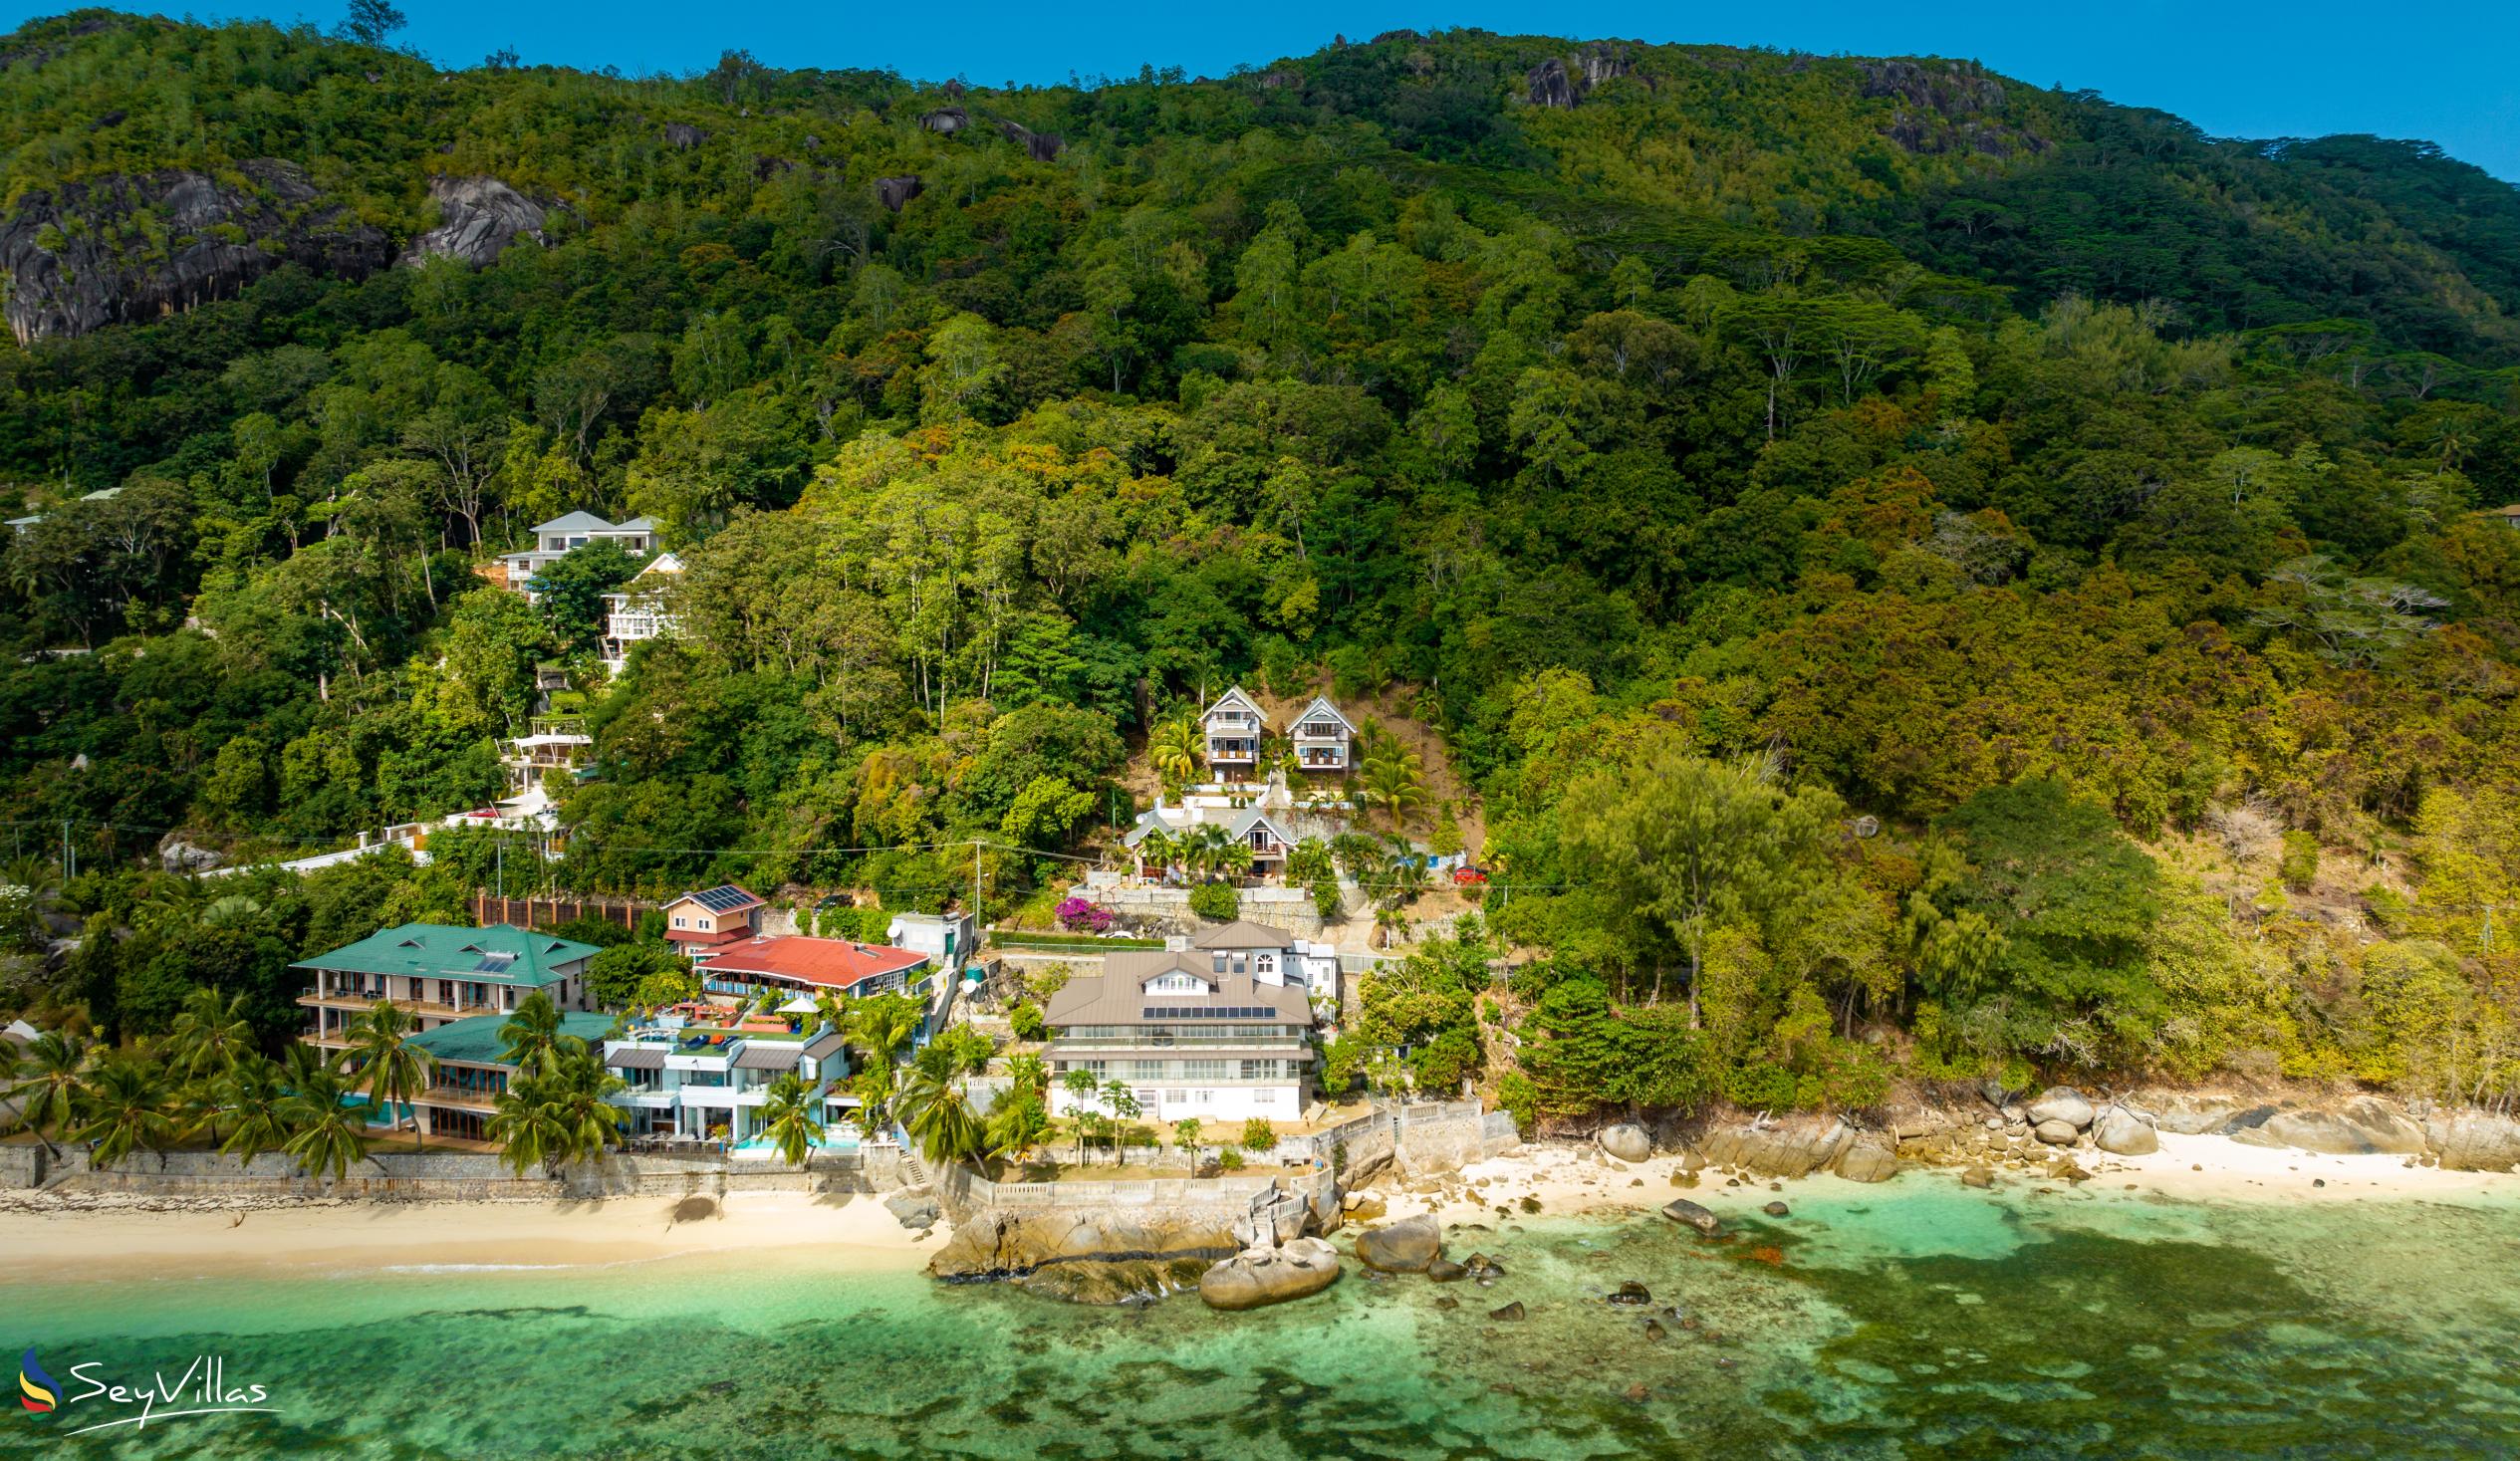 Foto 13: Mouggae Blues Villas - Posizione - Mahé (Seychelles)